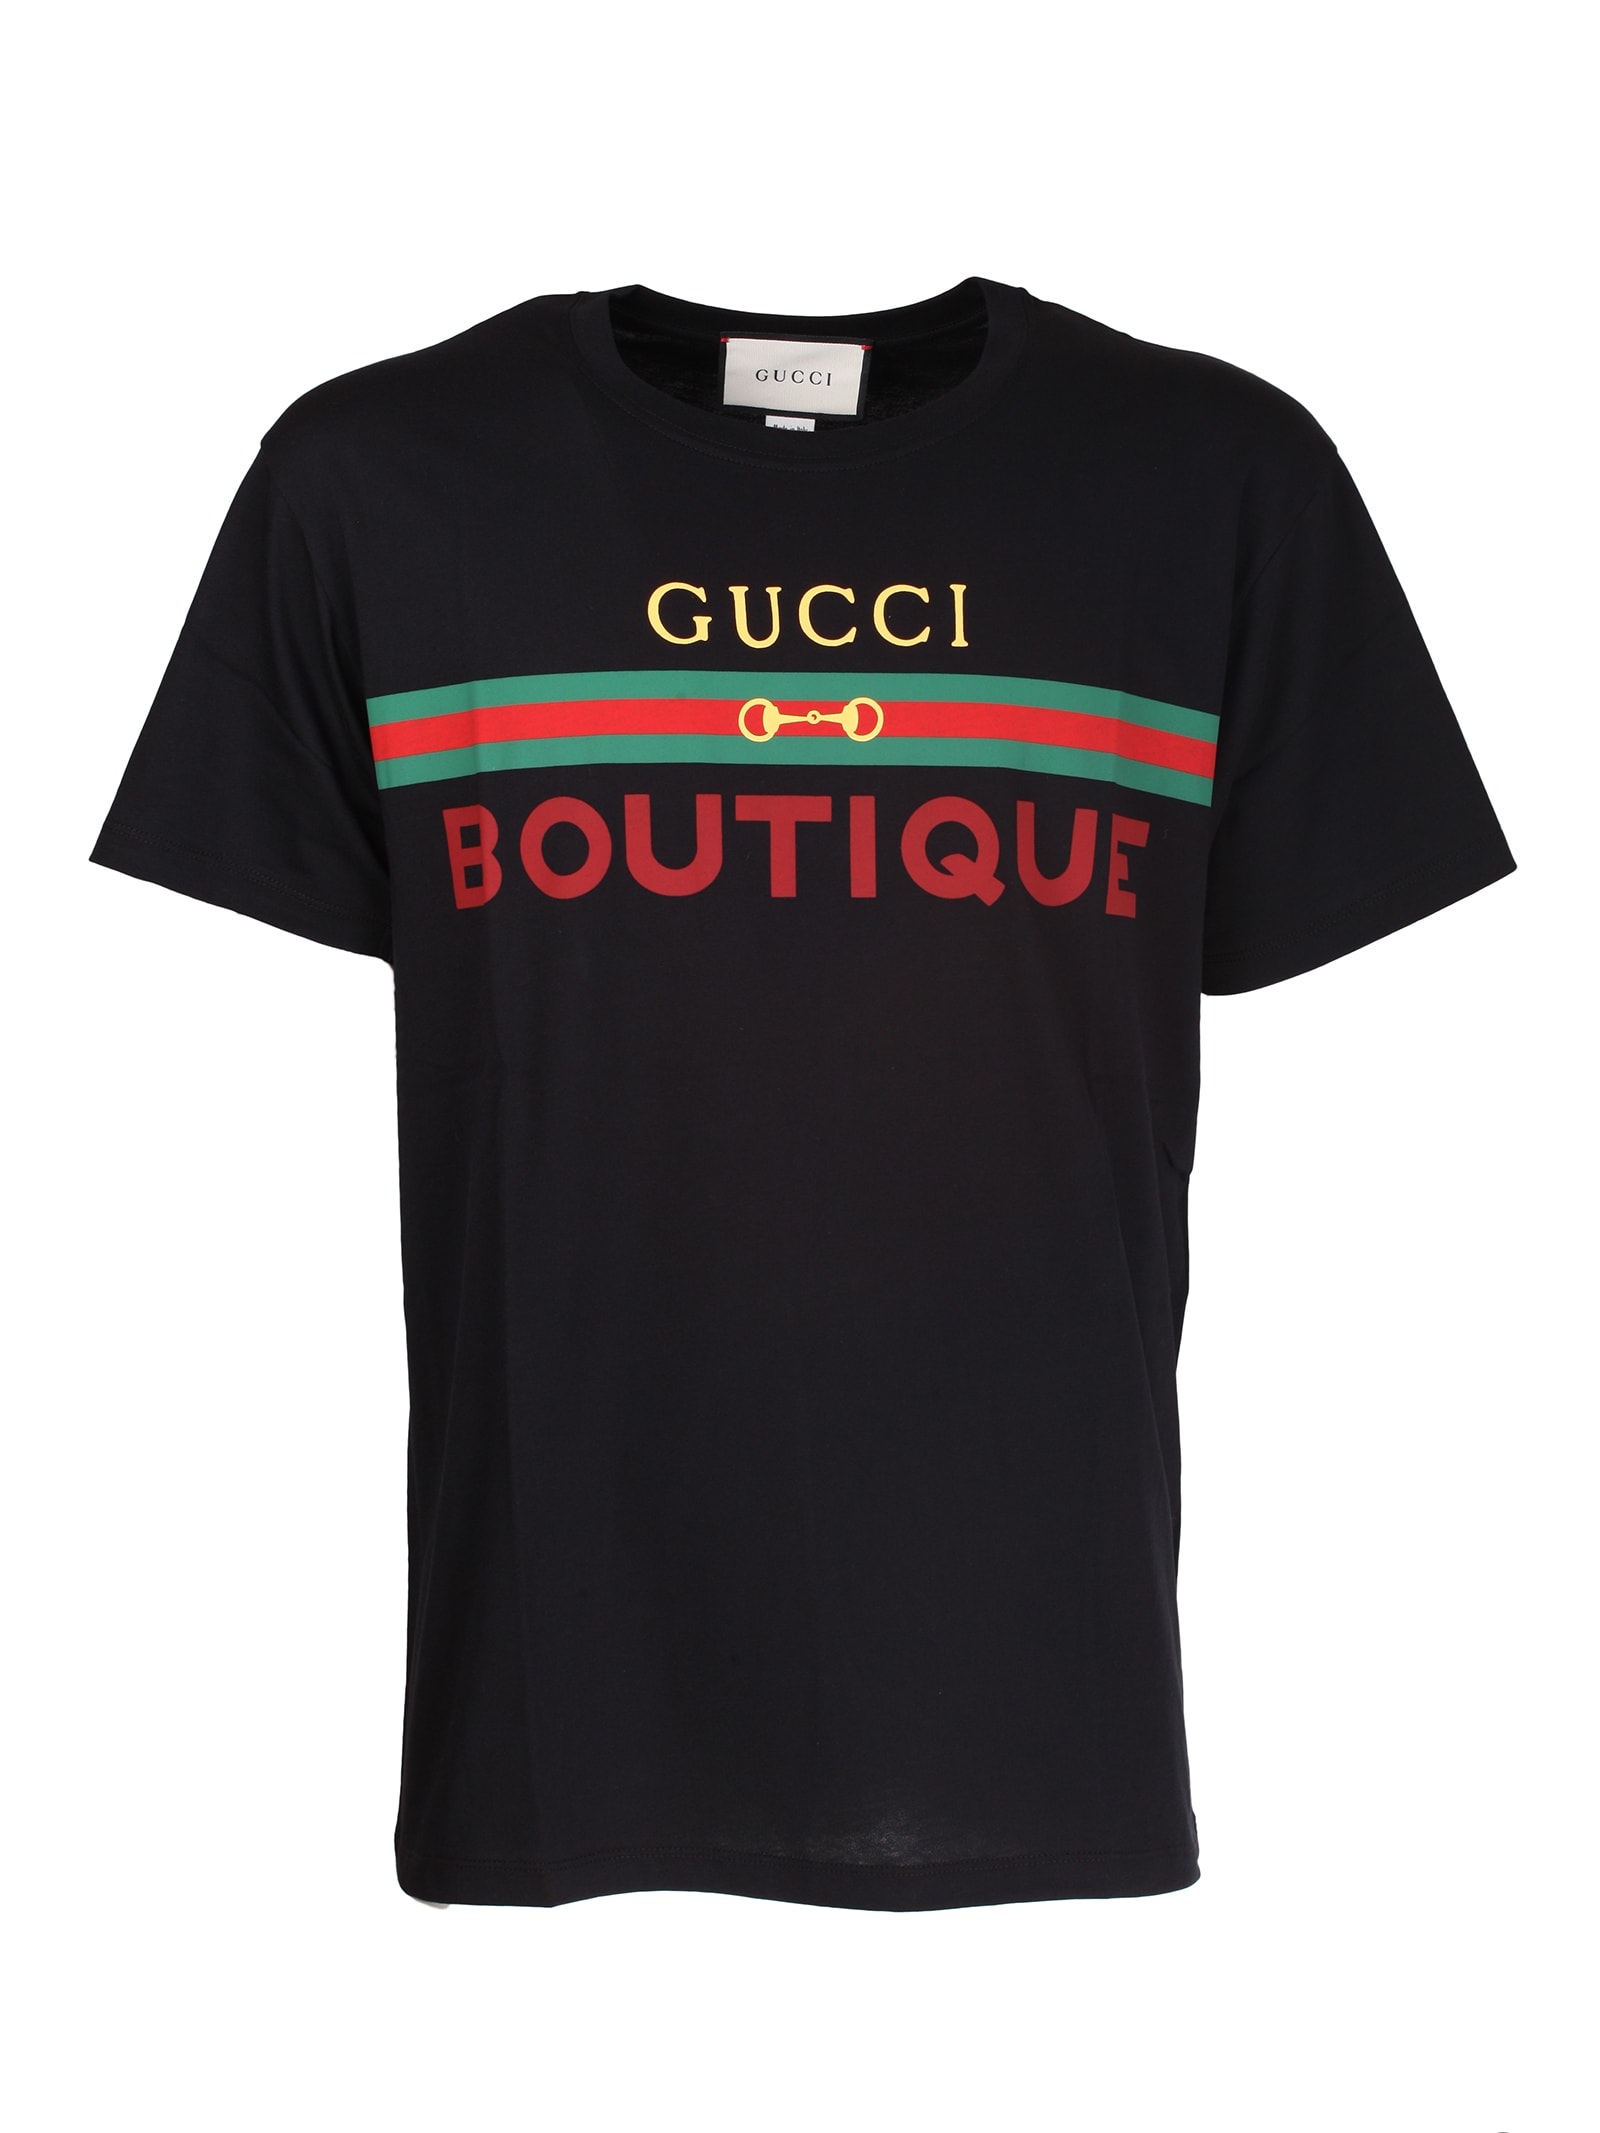 gucci shirts on sale